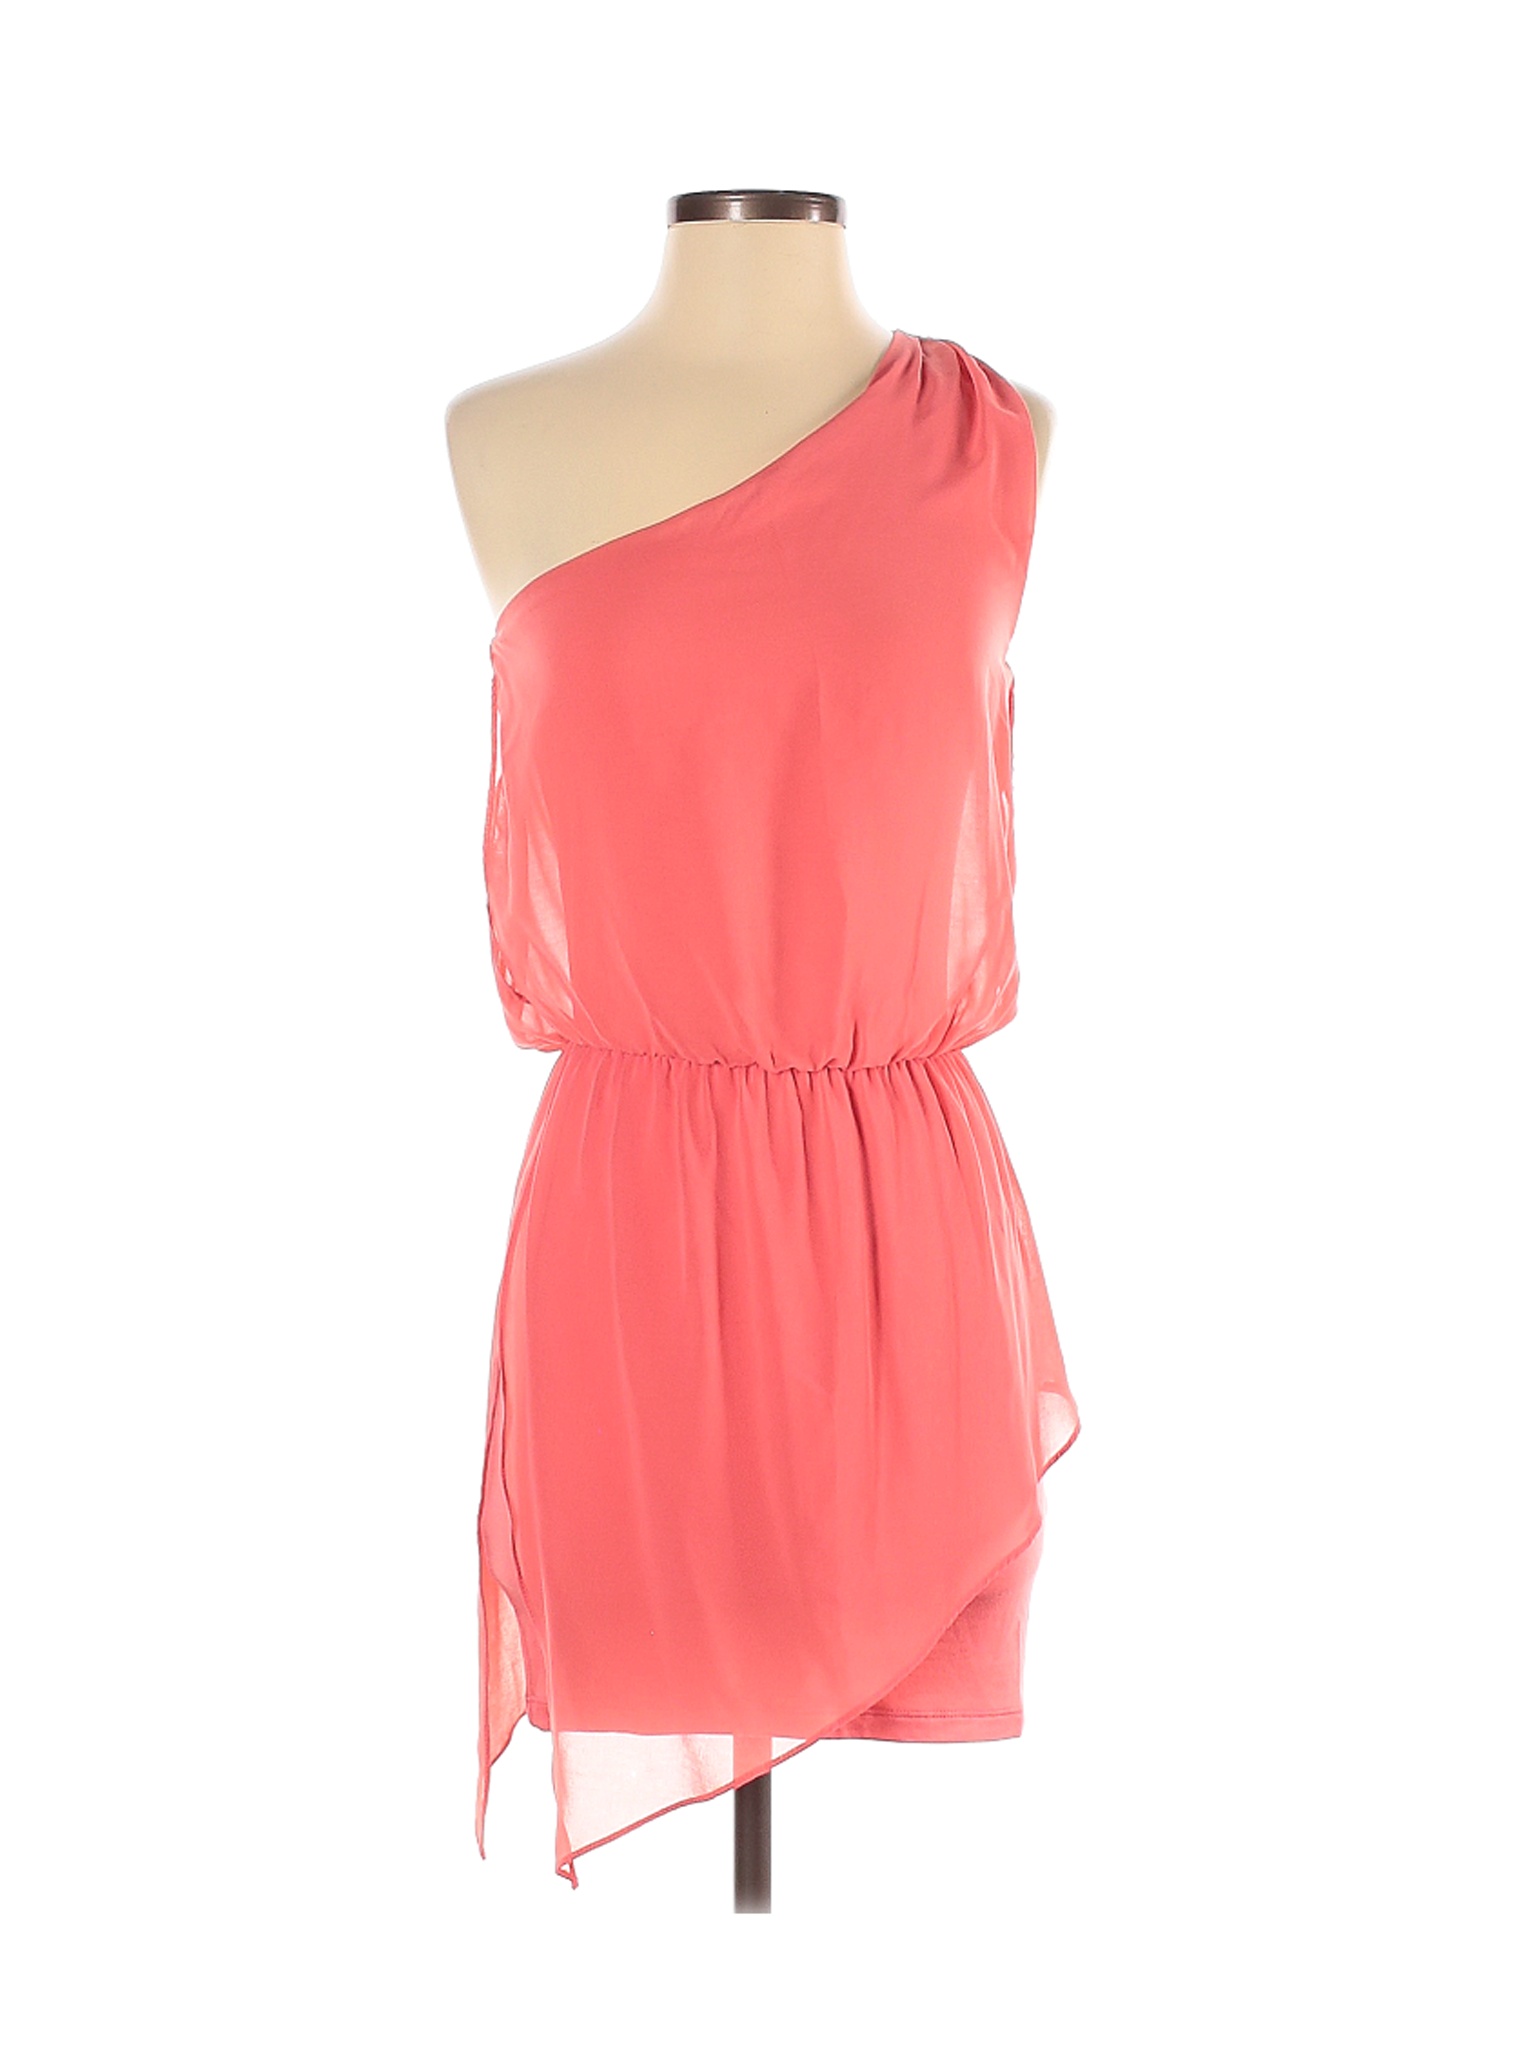 2b bebe Women Pink Casual Dress XS | eBay